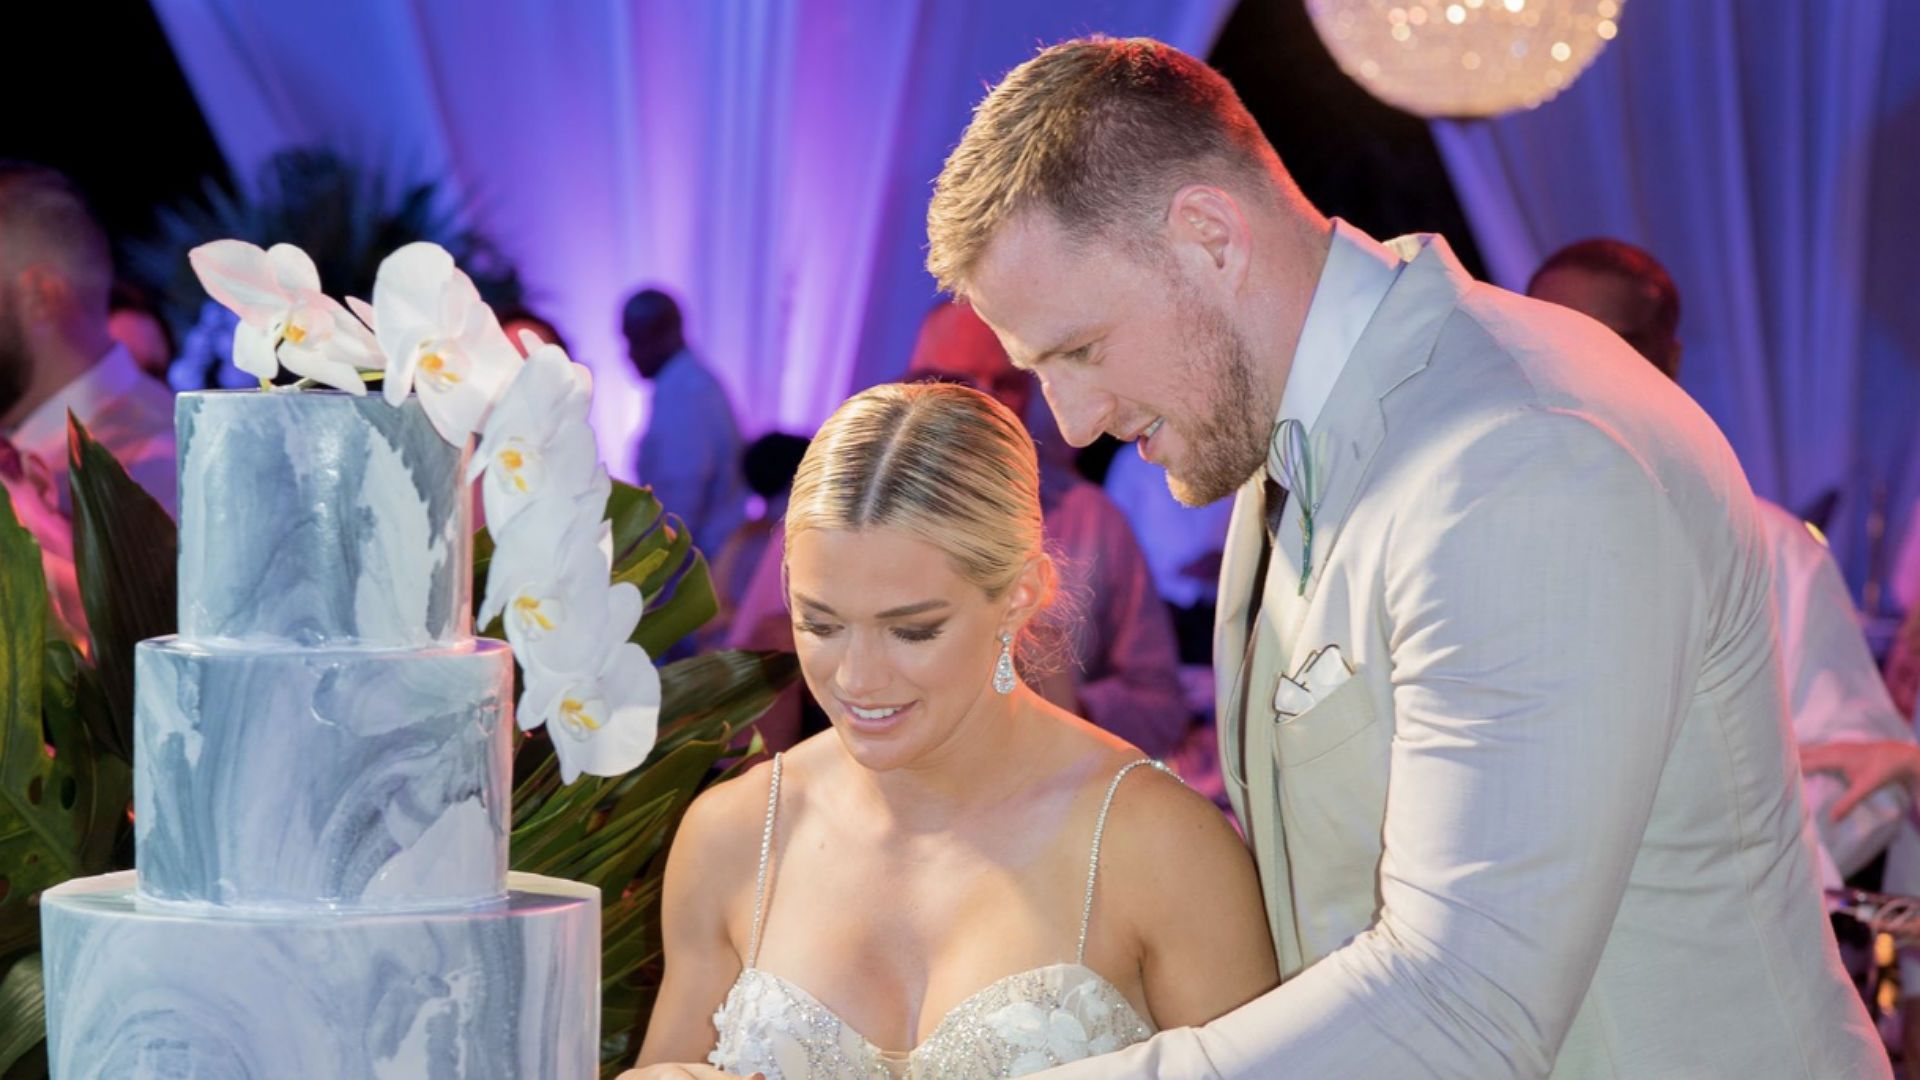 Texans defensive end J.J. Watt gets married to soccer star Kealia Ohai in Bahamas wedding